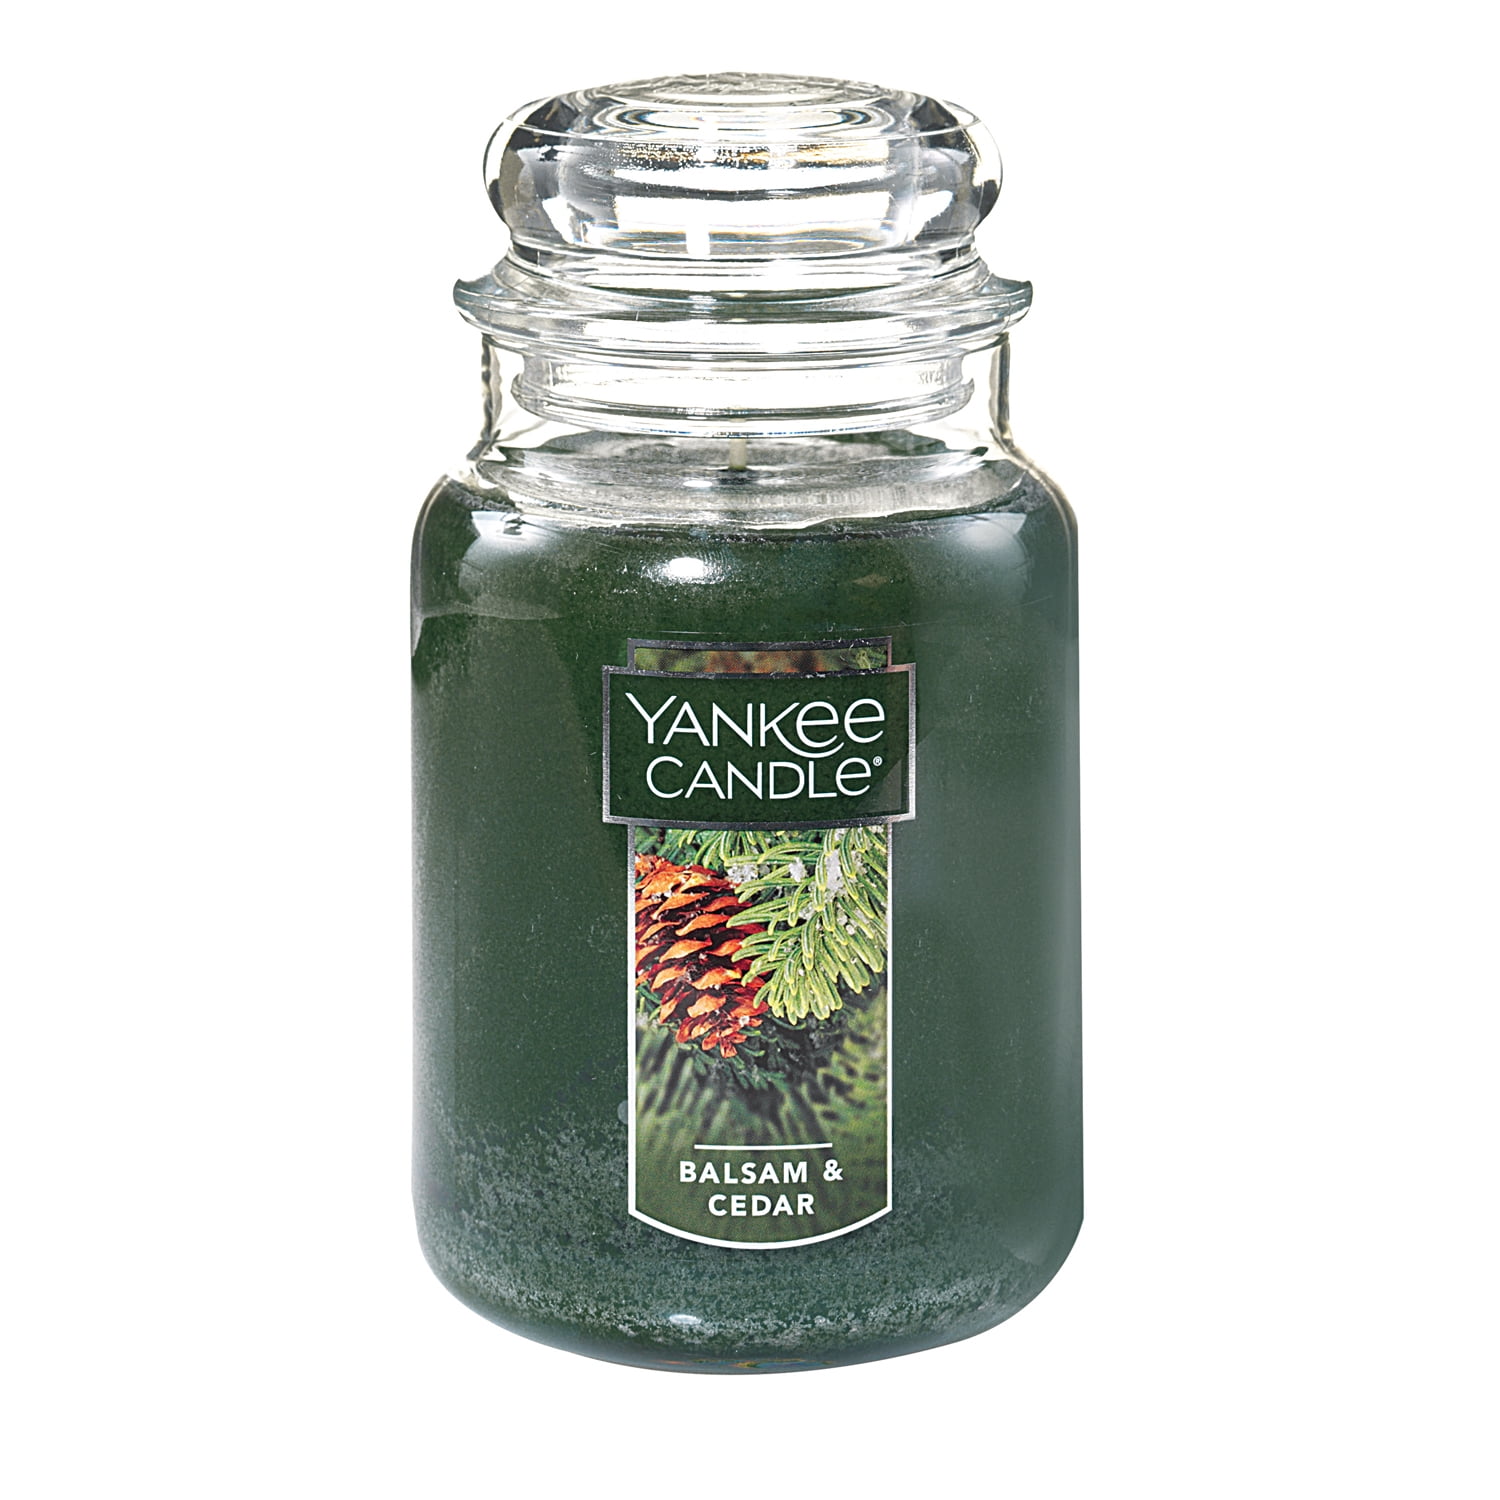 Yankee Candle Large Jar Candle Midsummer's Night